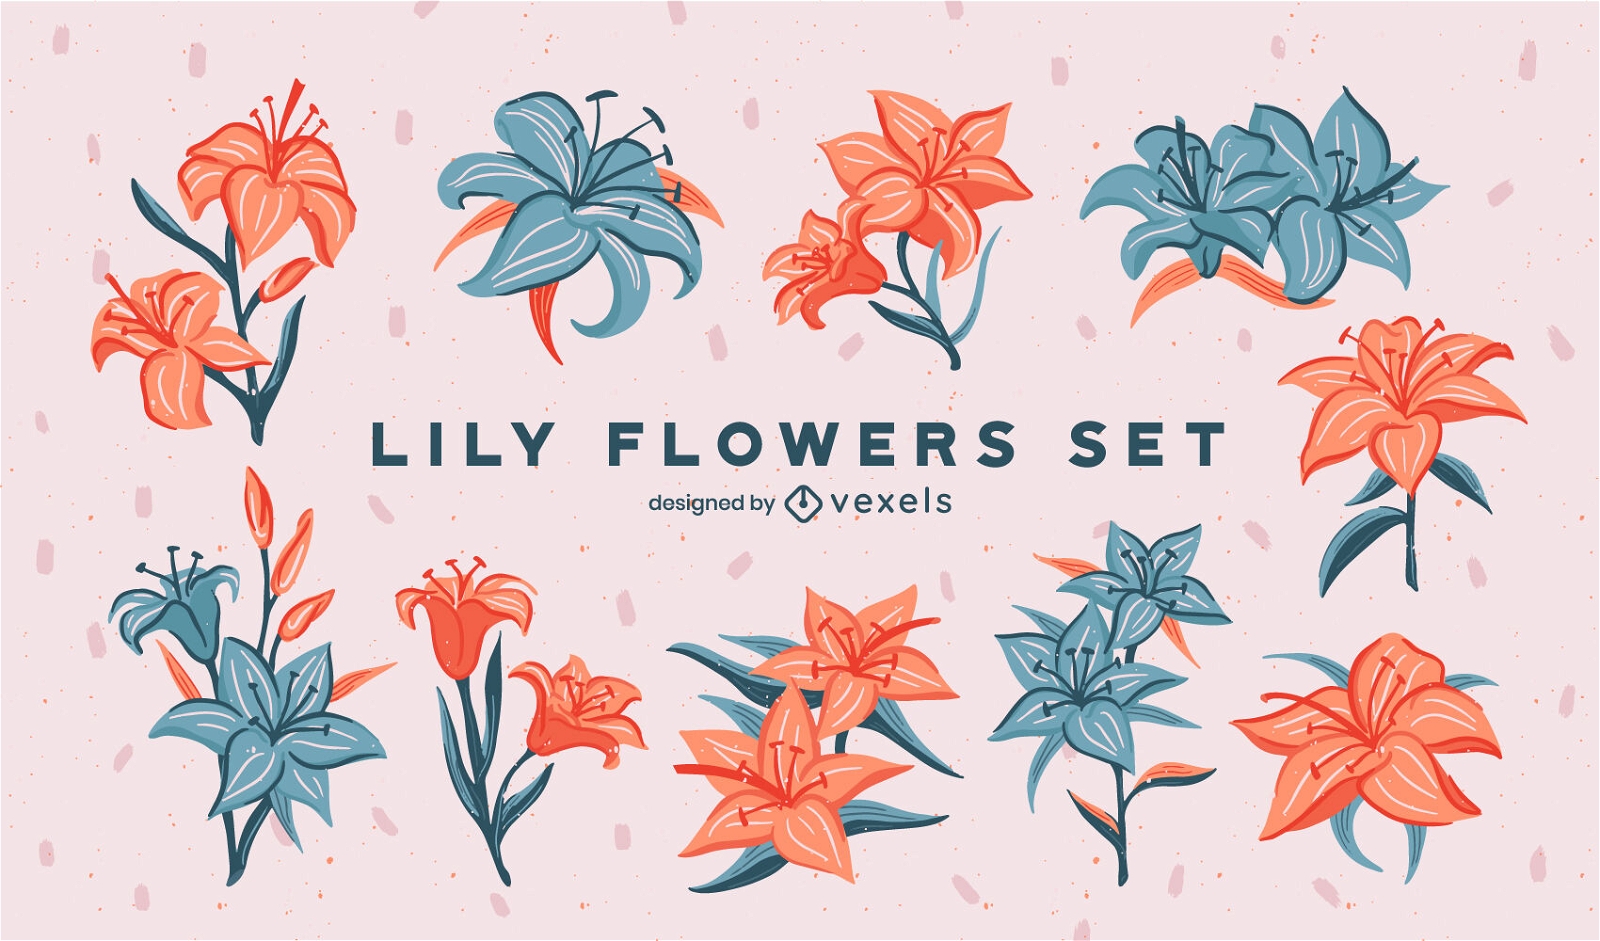 Lily flowers set design